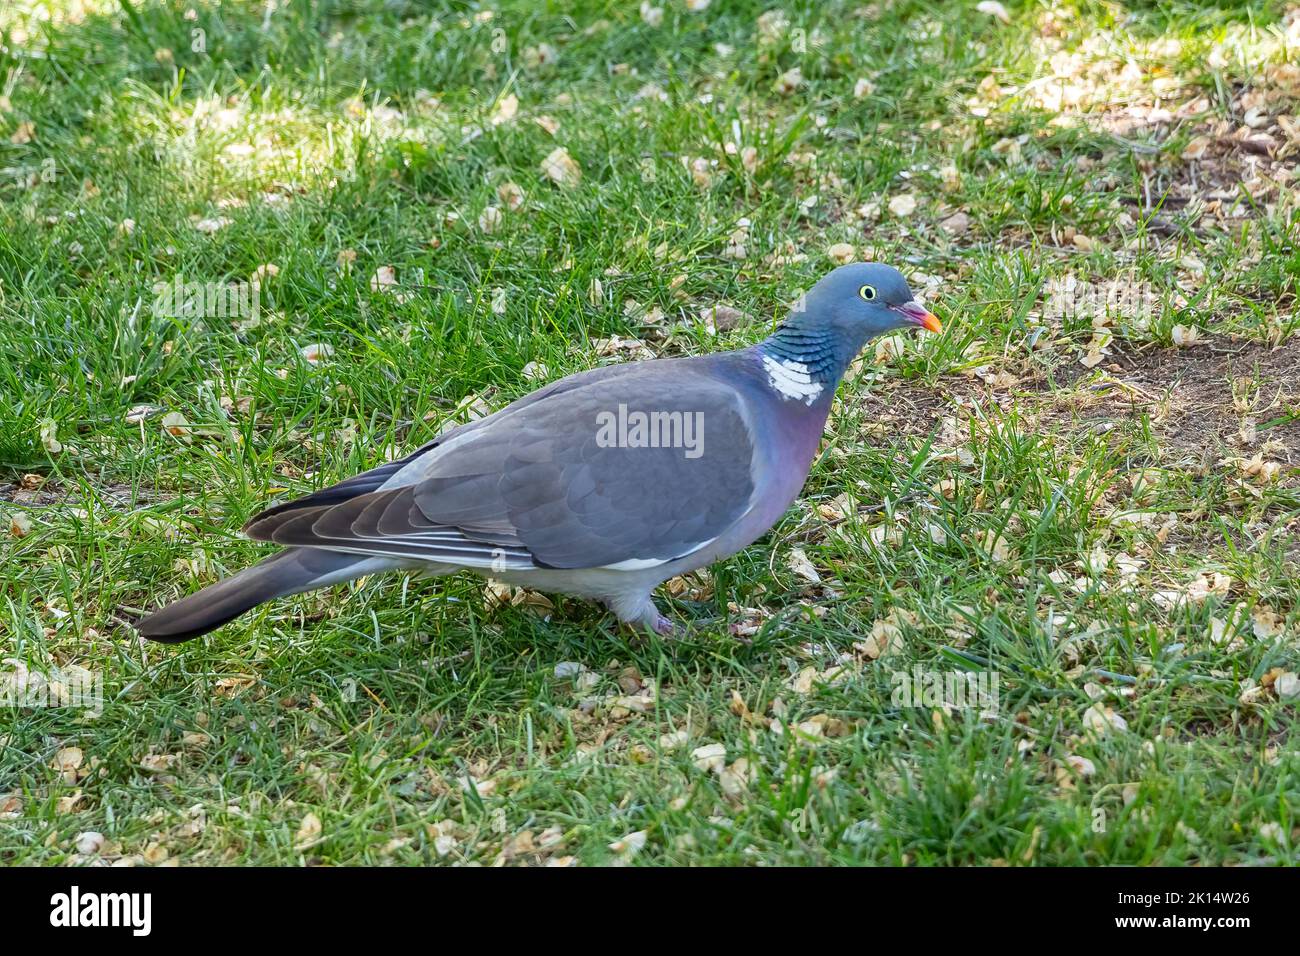 Adult common wood pigeon, columba palumbus, standing on the grass Stock Photo